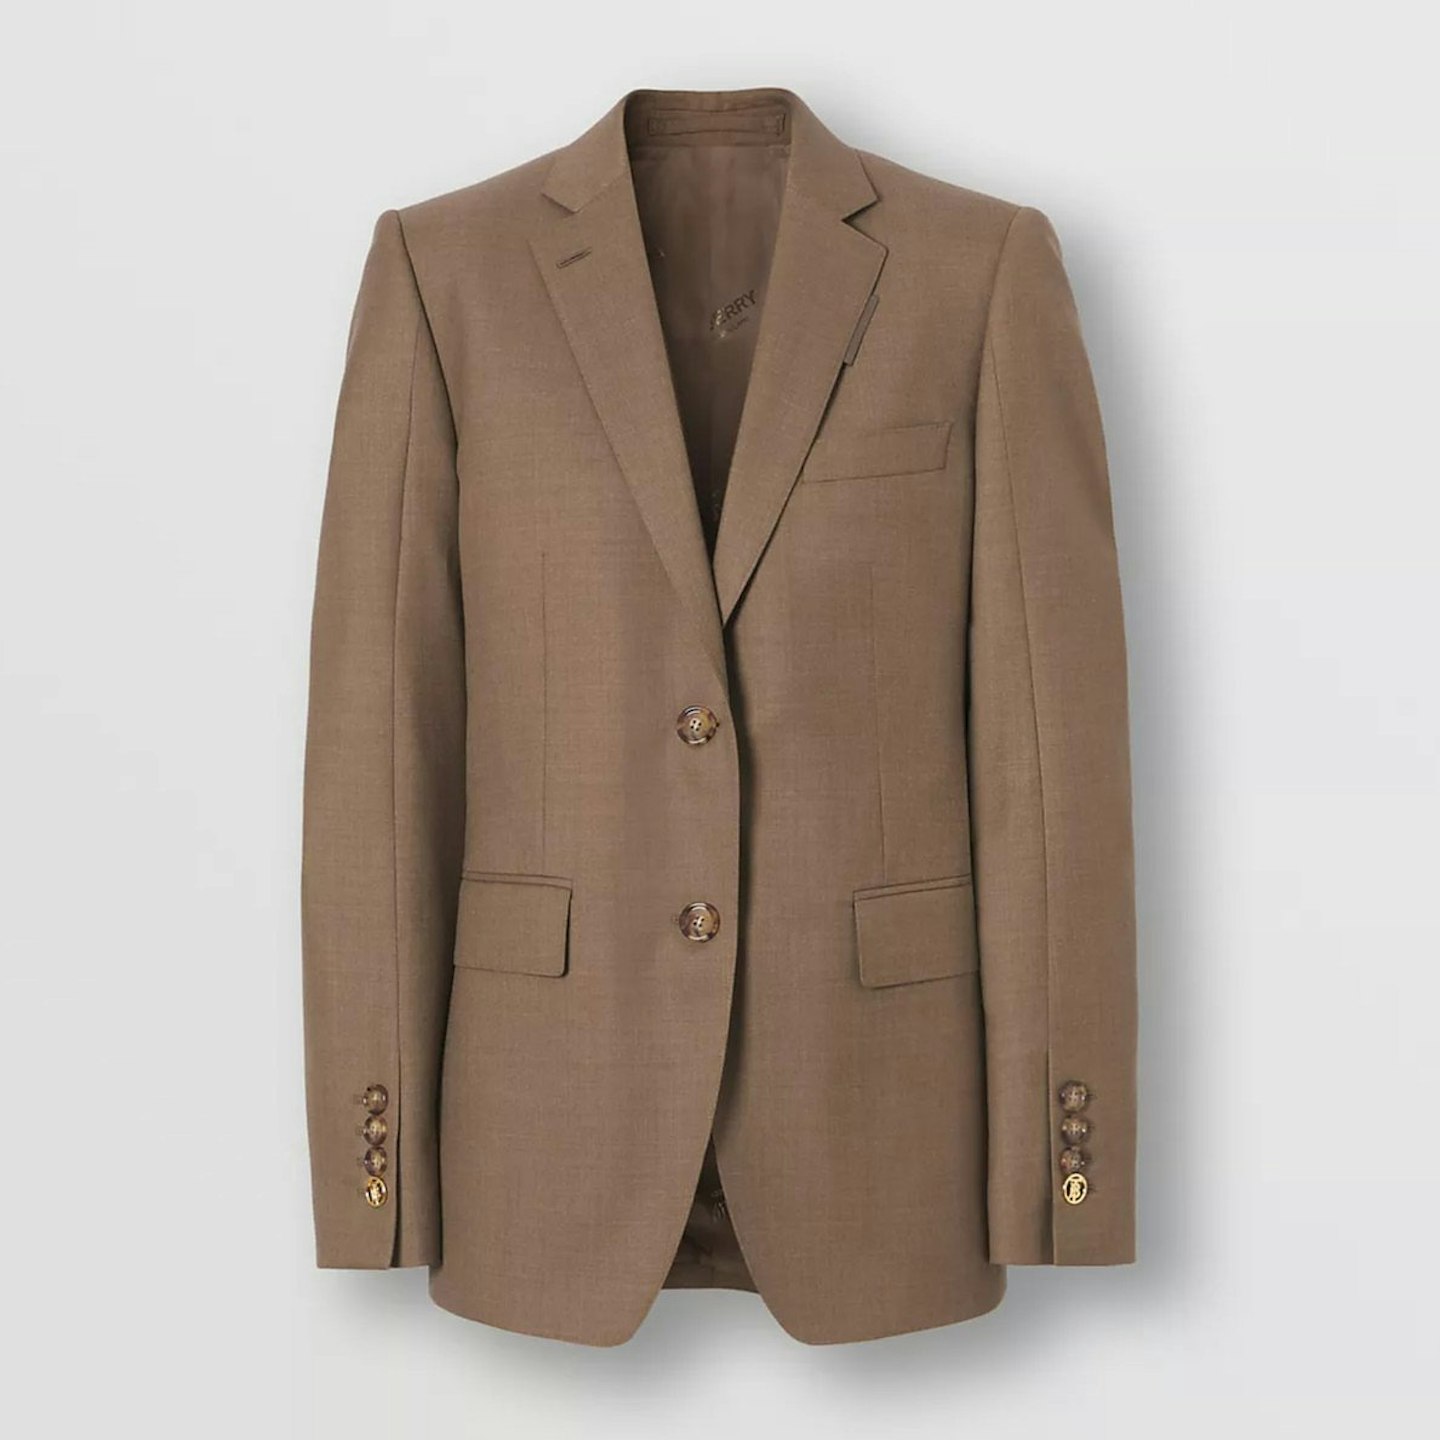 Tailored Wool Jacket, £21